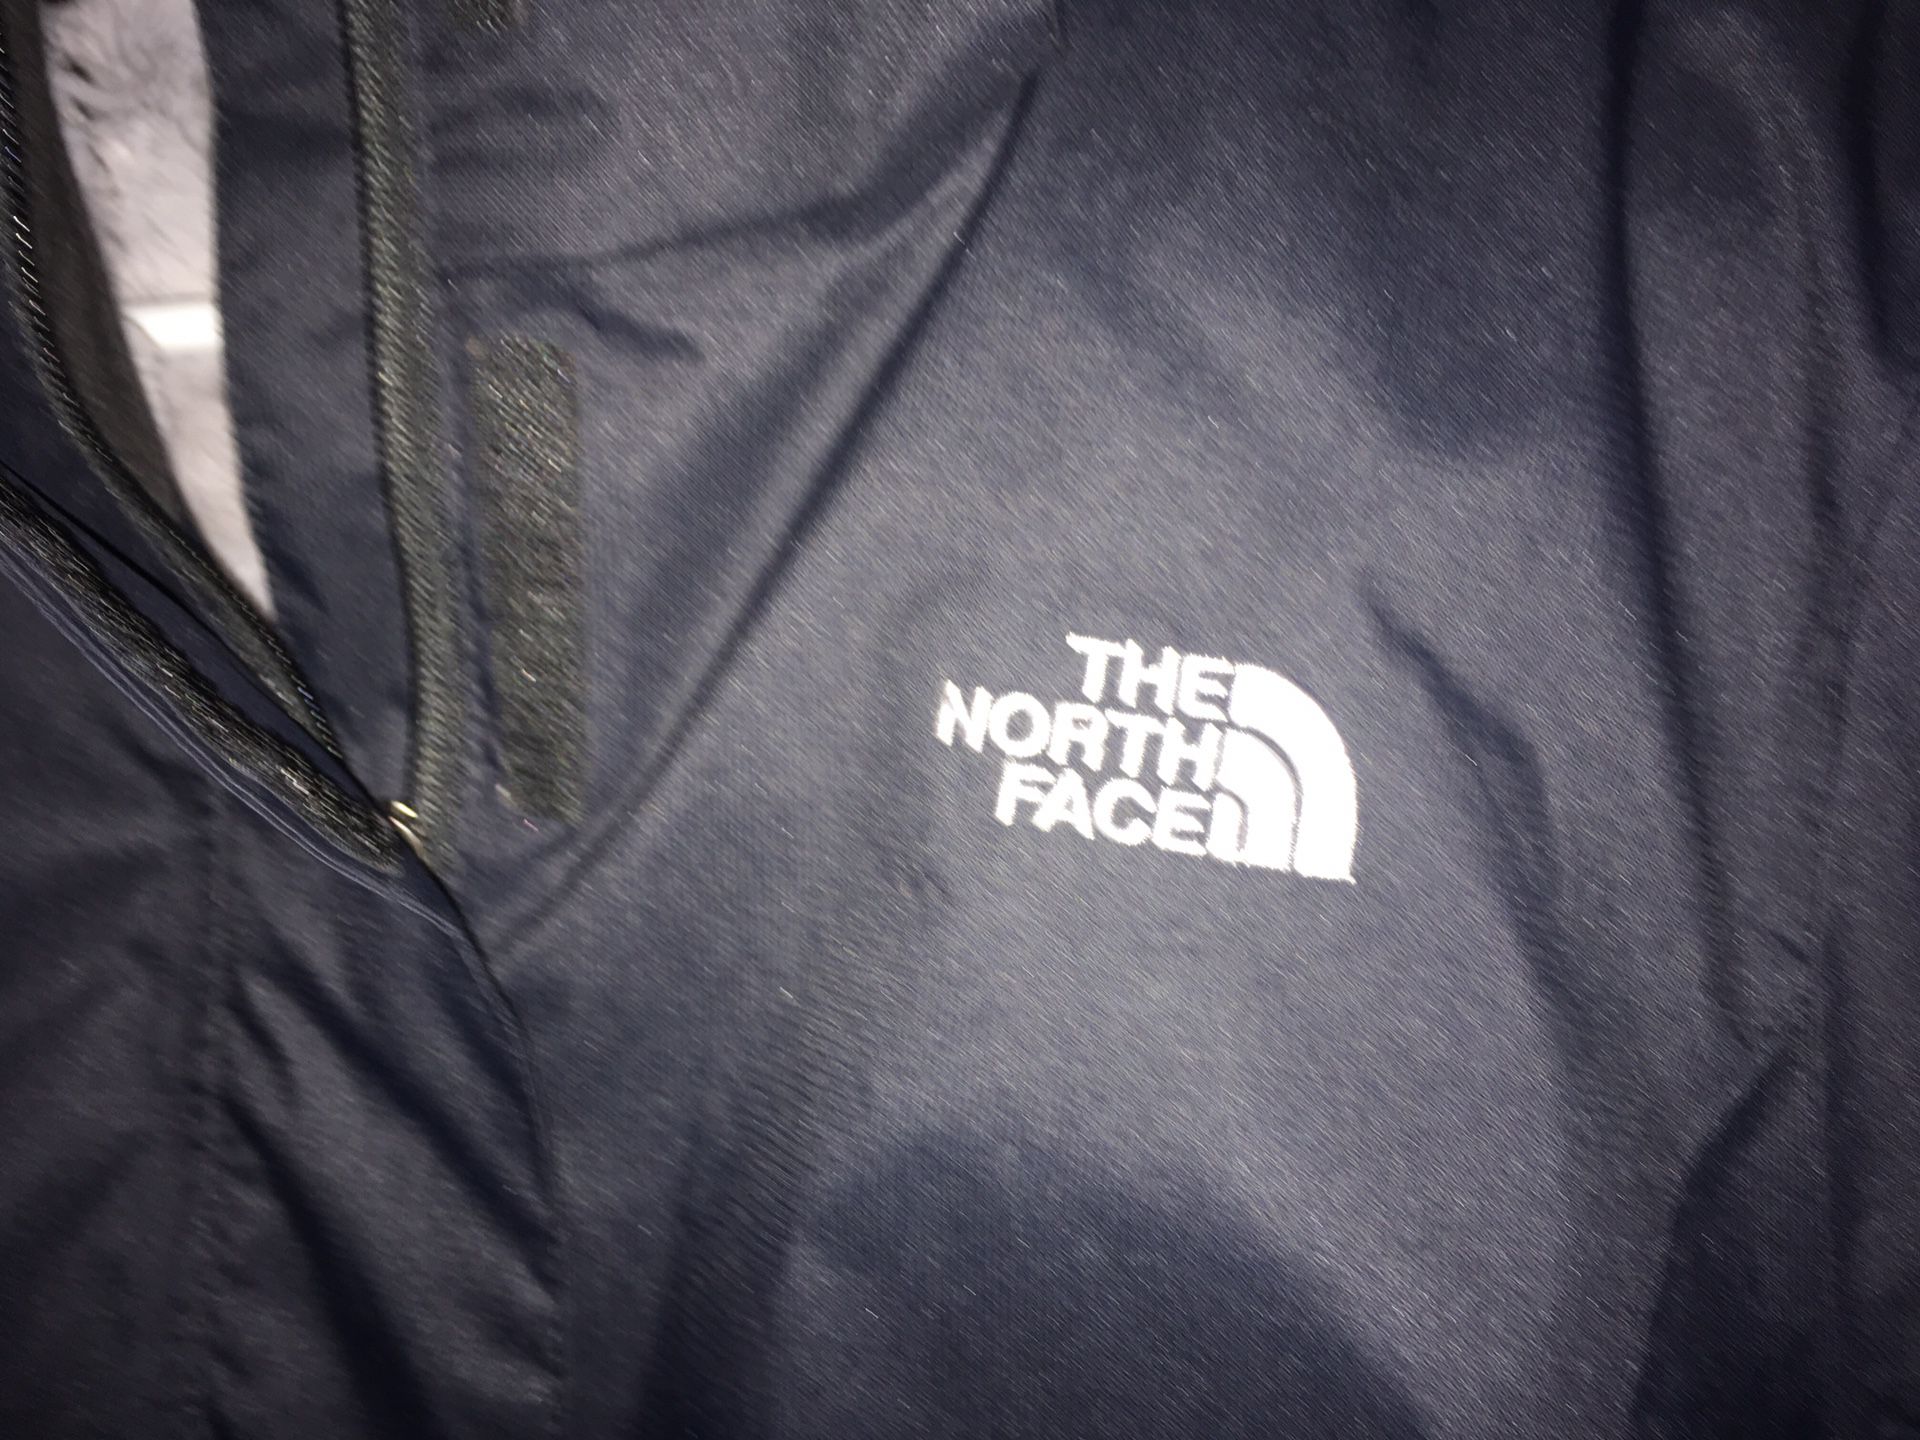 Northface 2 in 1 jacket